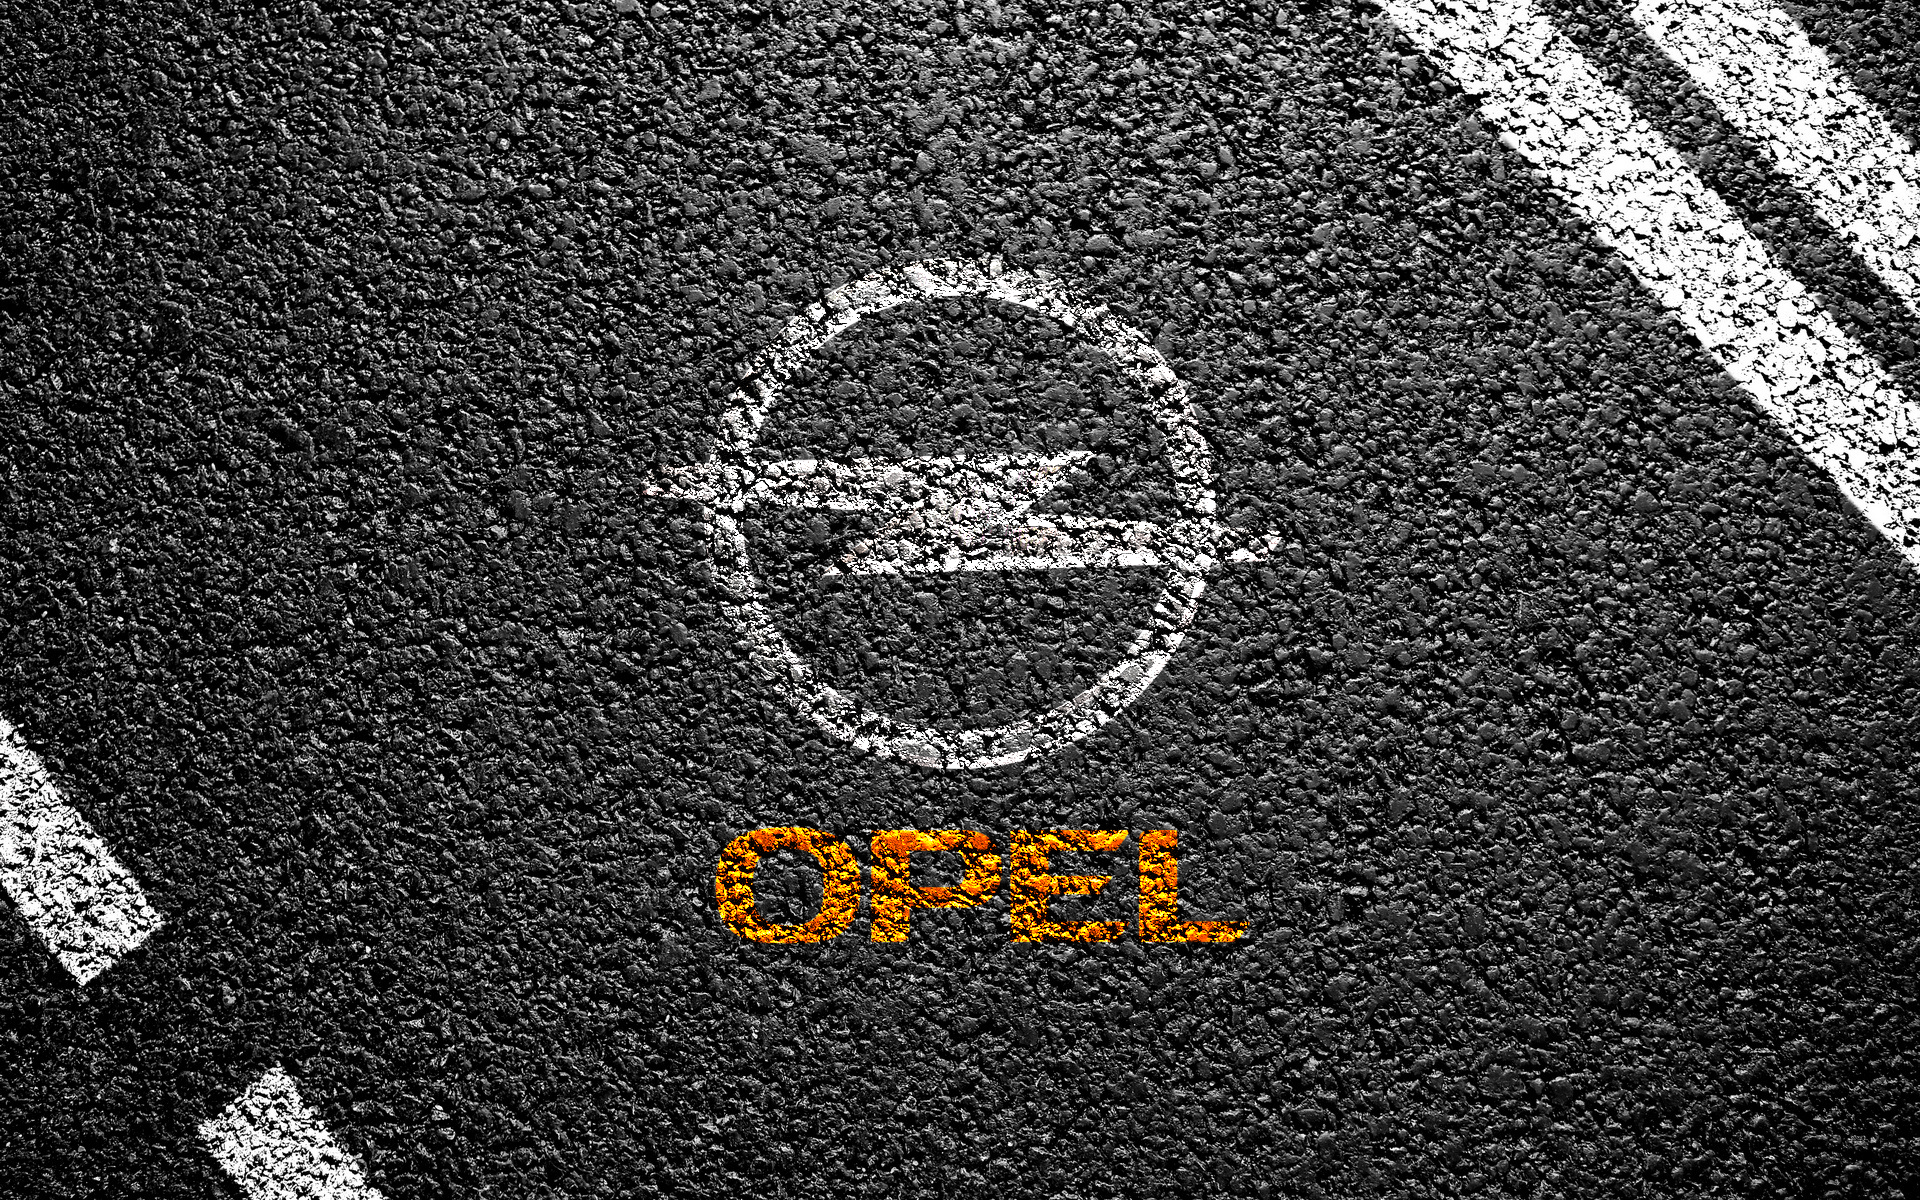 Handy-Wallpaper Opel, Logo, Fahrzeuge kostenlos herunterladen.